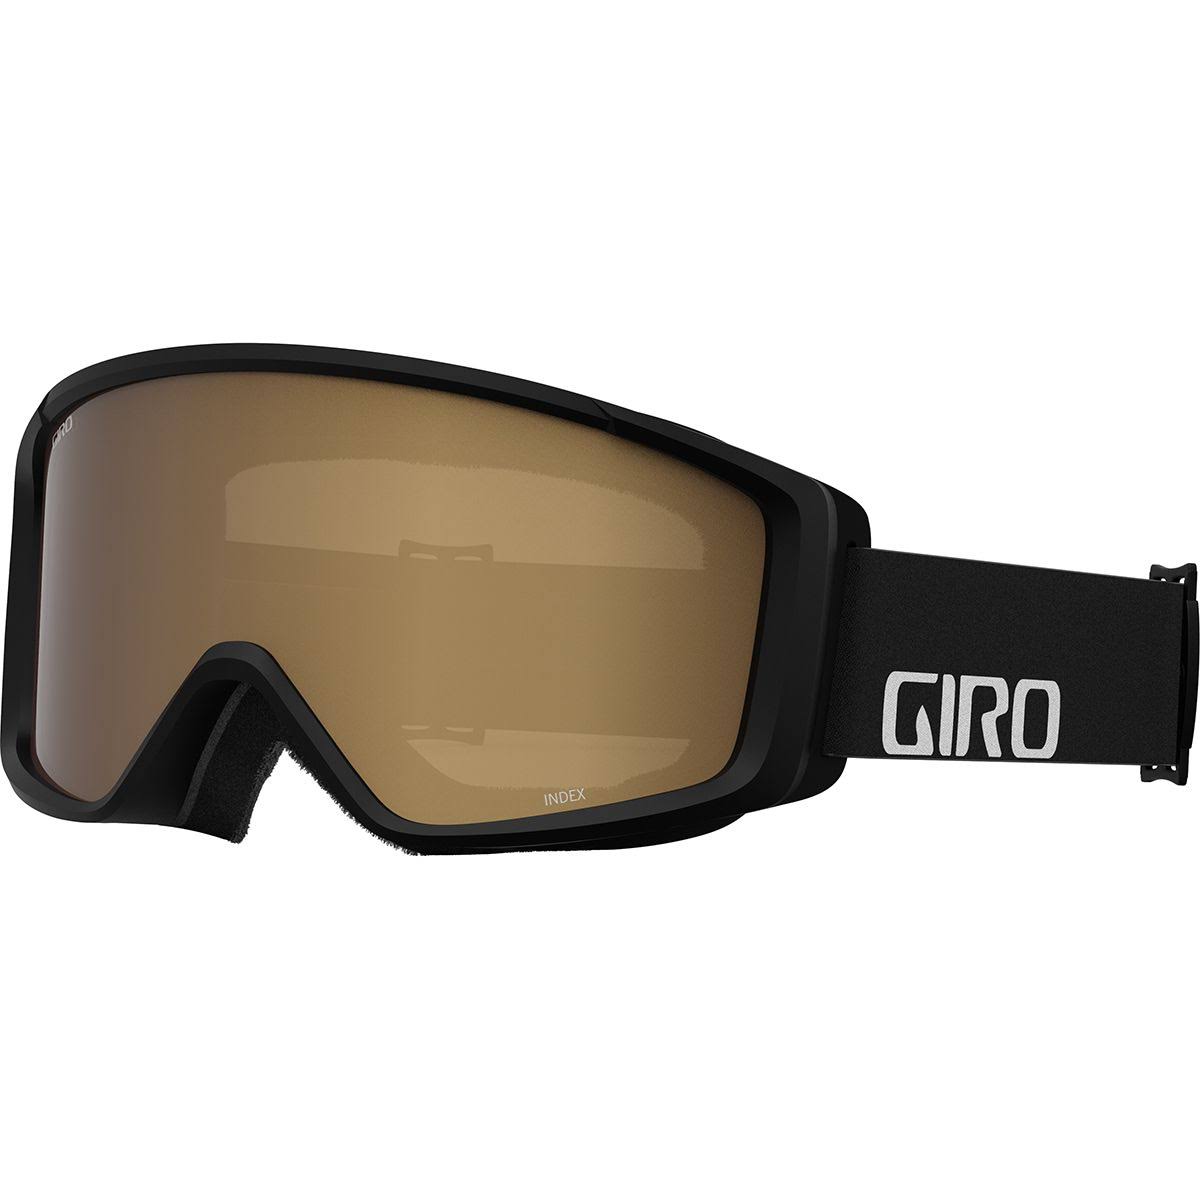 Giro Index 2.0 Ski Goggles (Black)